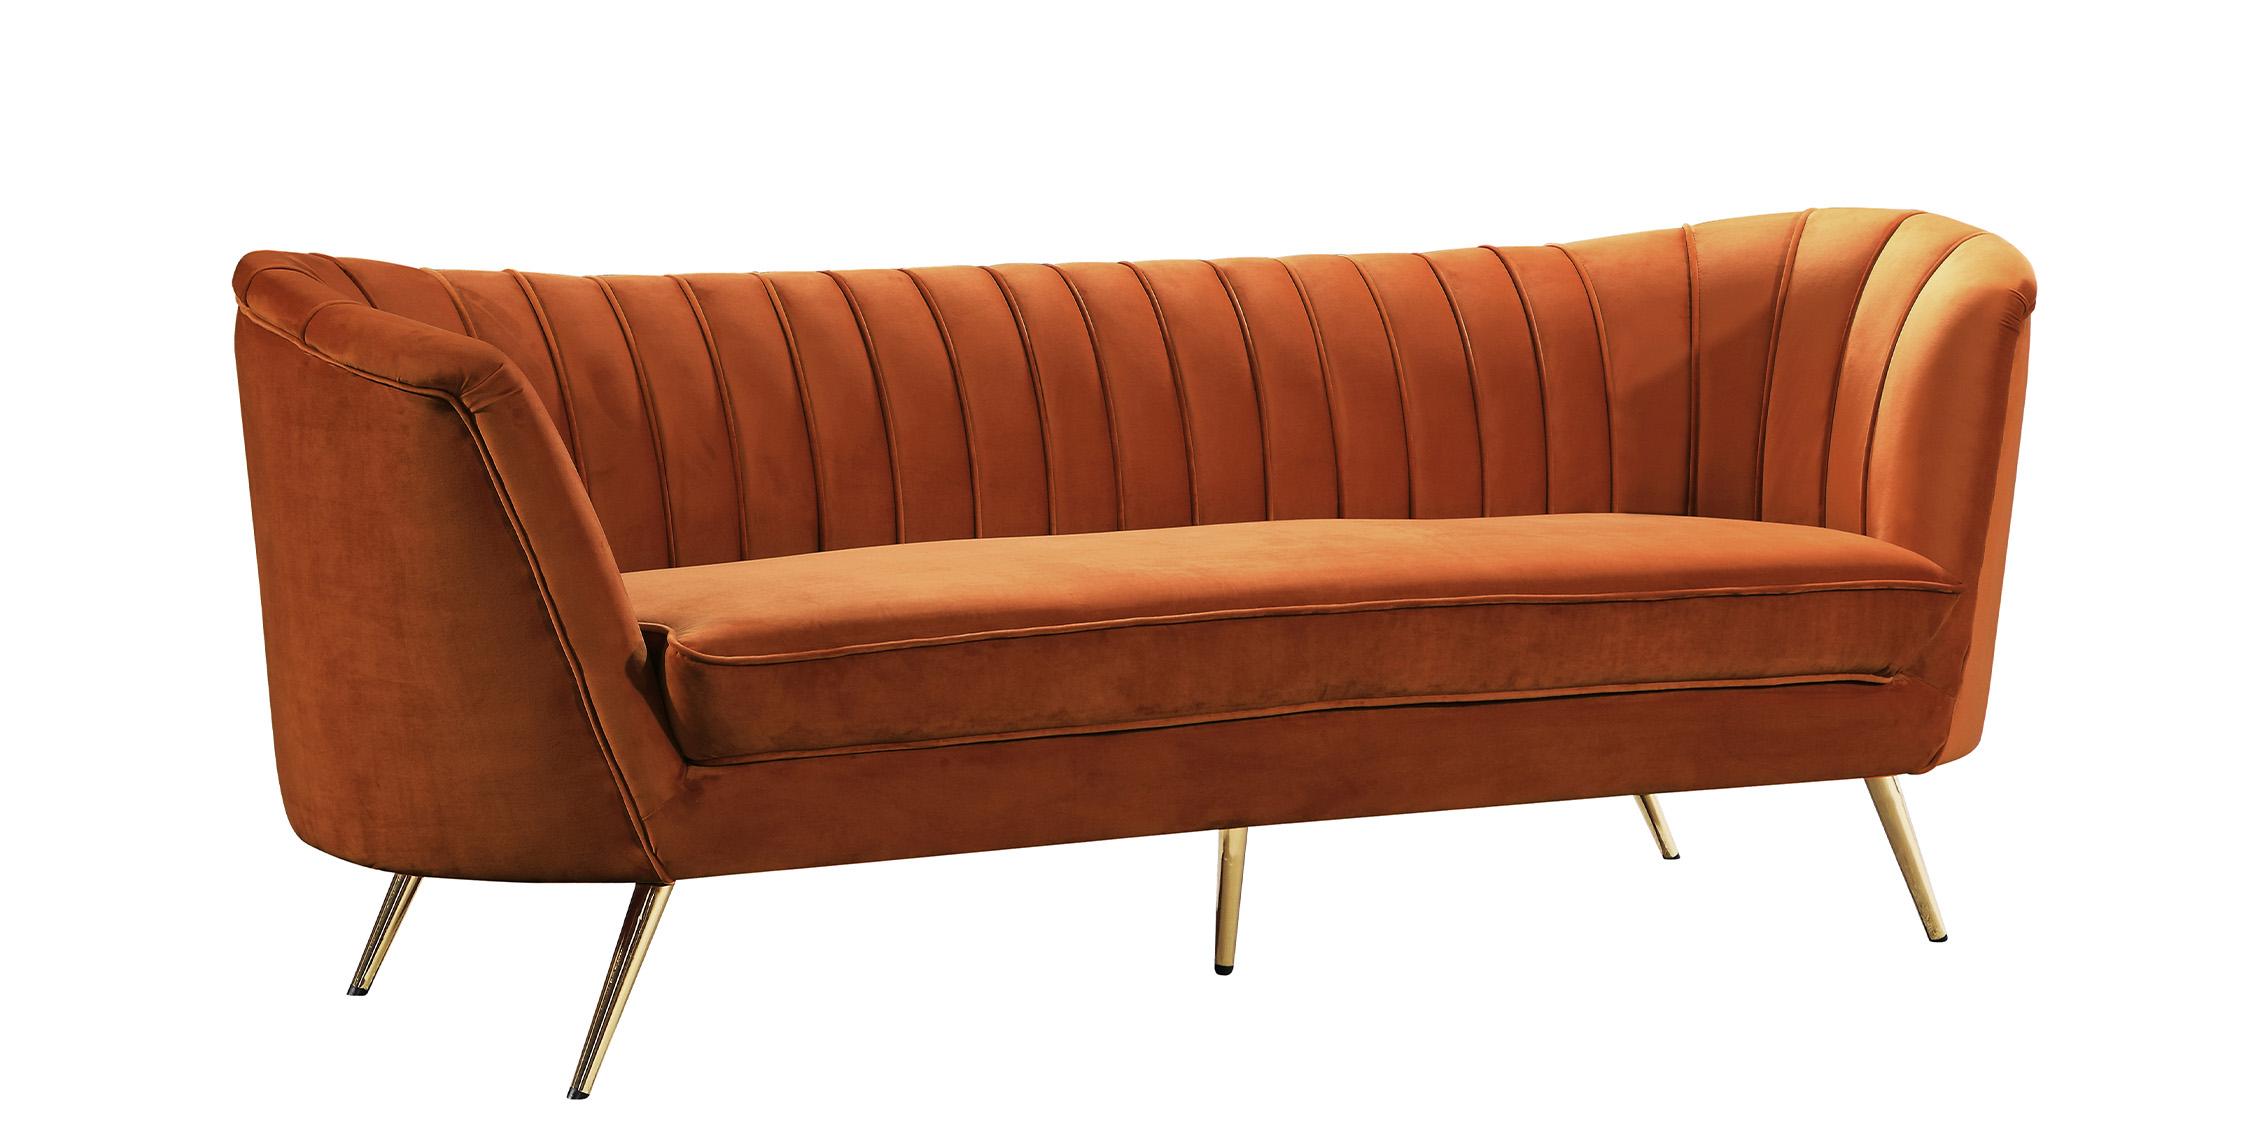 

    
Cognac Velvet Sofa Set 3Pcs Margo 622Cognac-S Meridian Modern Contemporary
